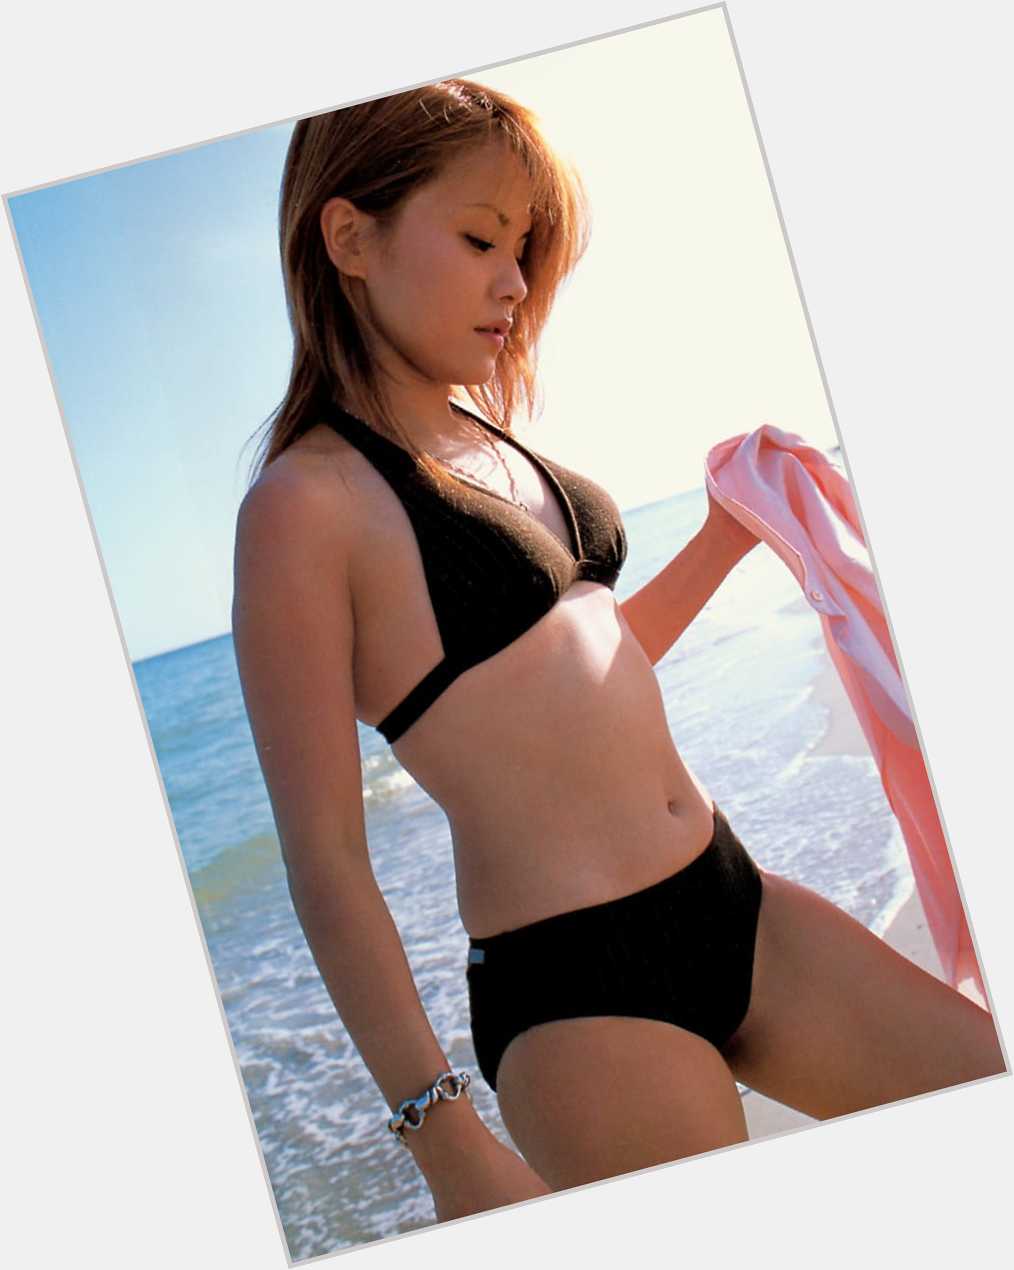 <a href="/hot-women/yuko-nakazawa/where-dating-news-photos">Yuko Nakazawa</a>  